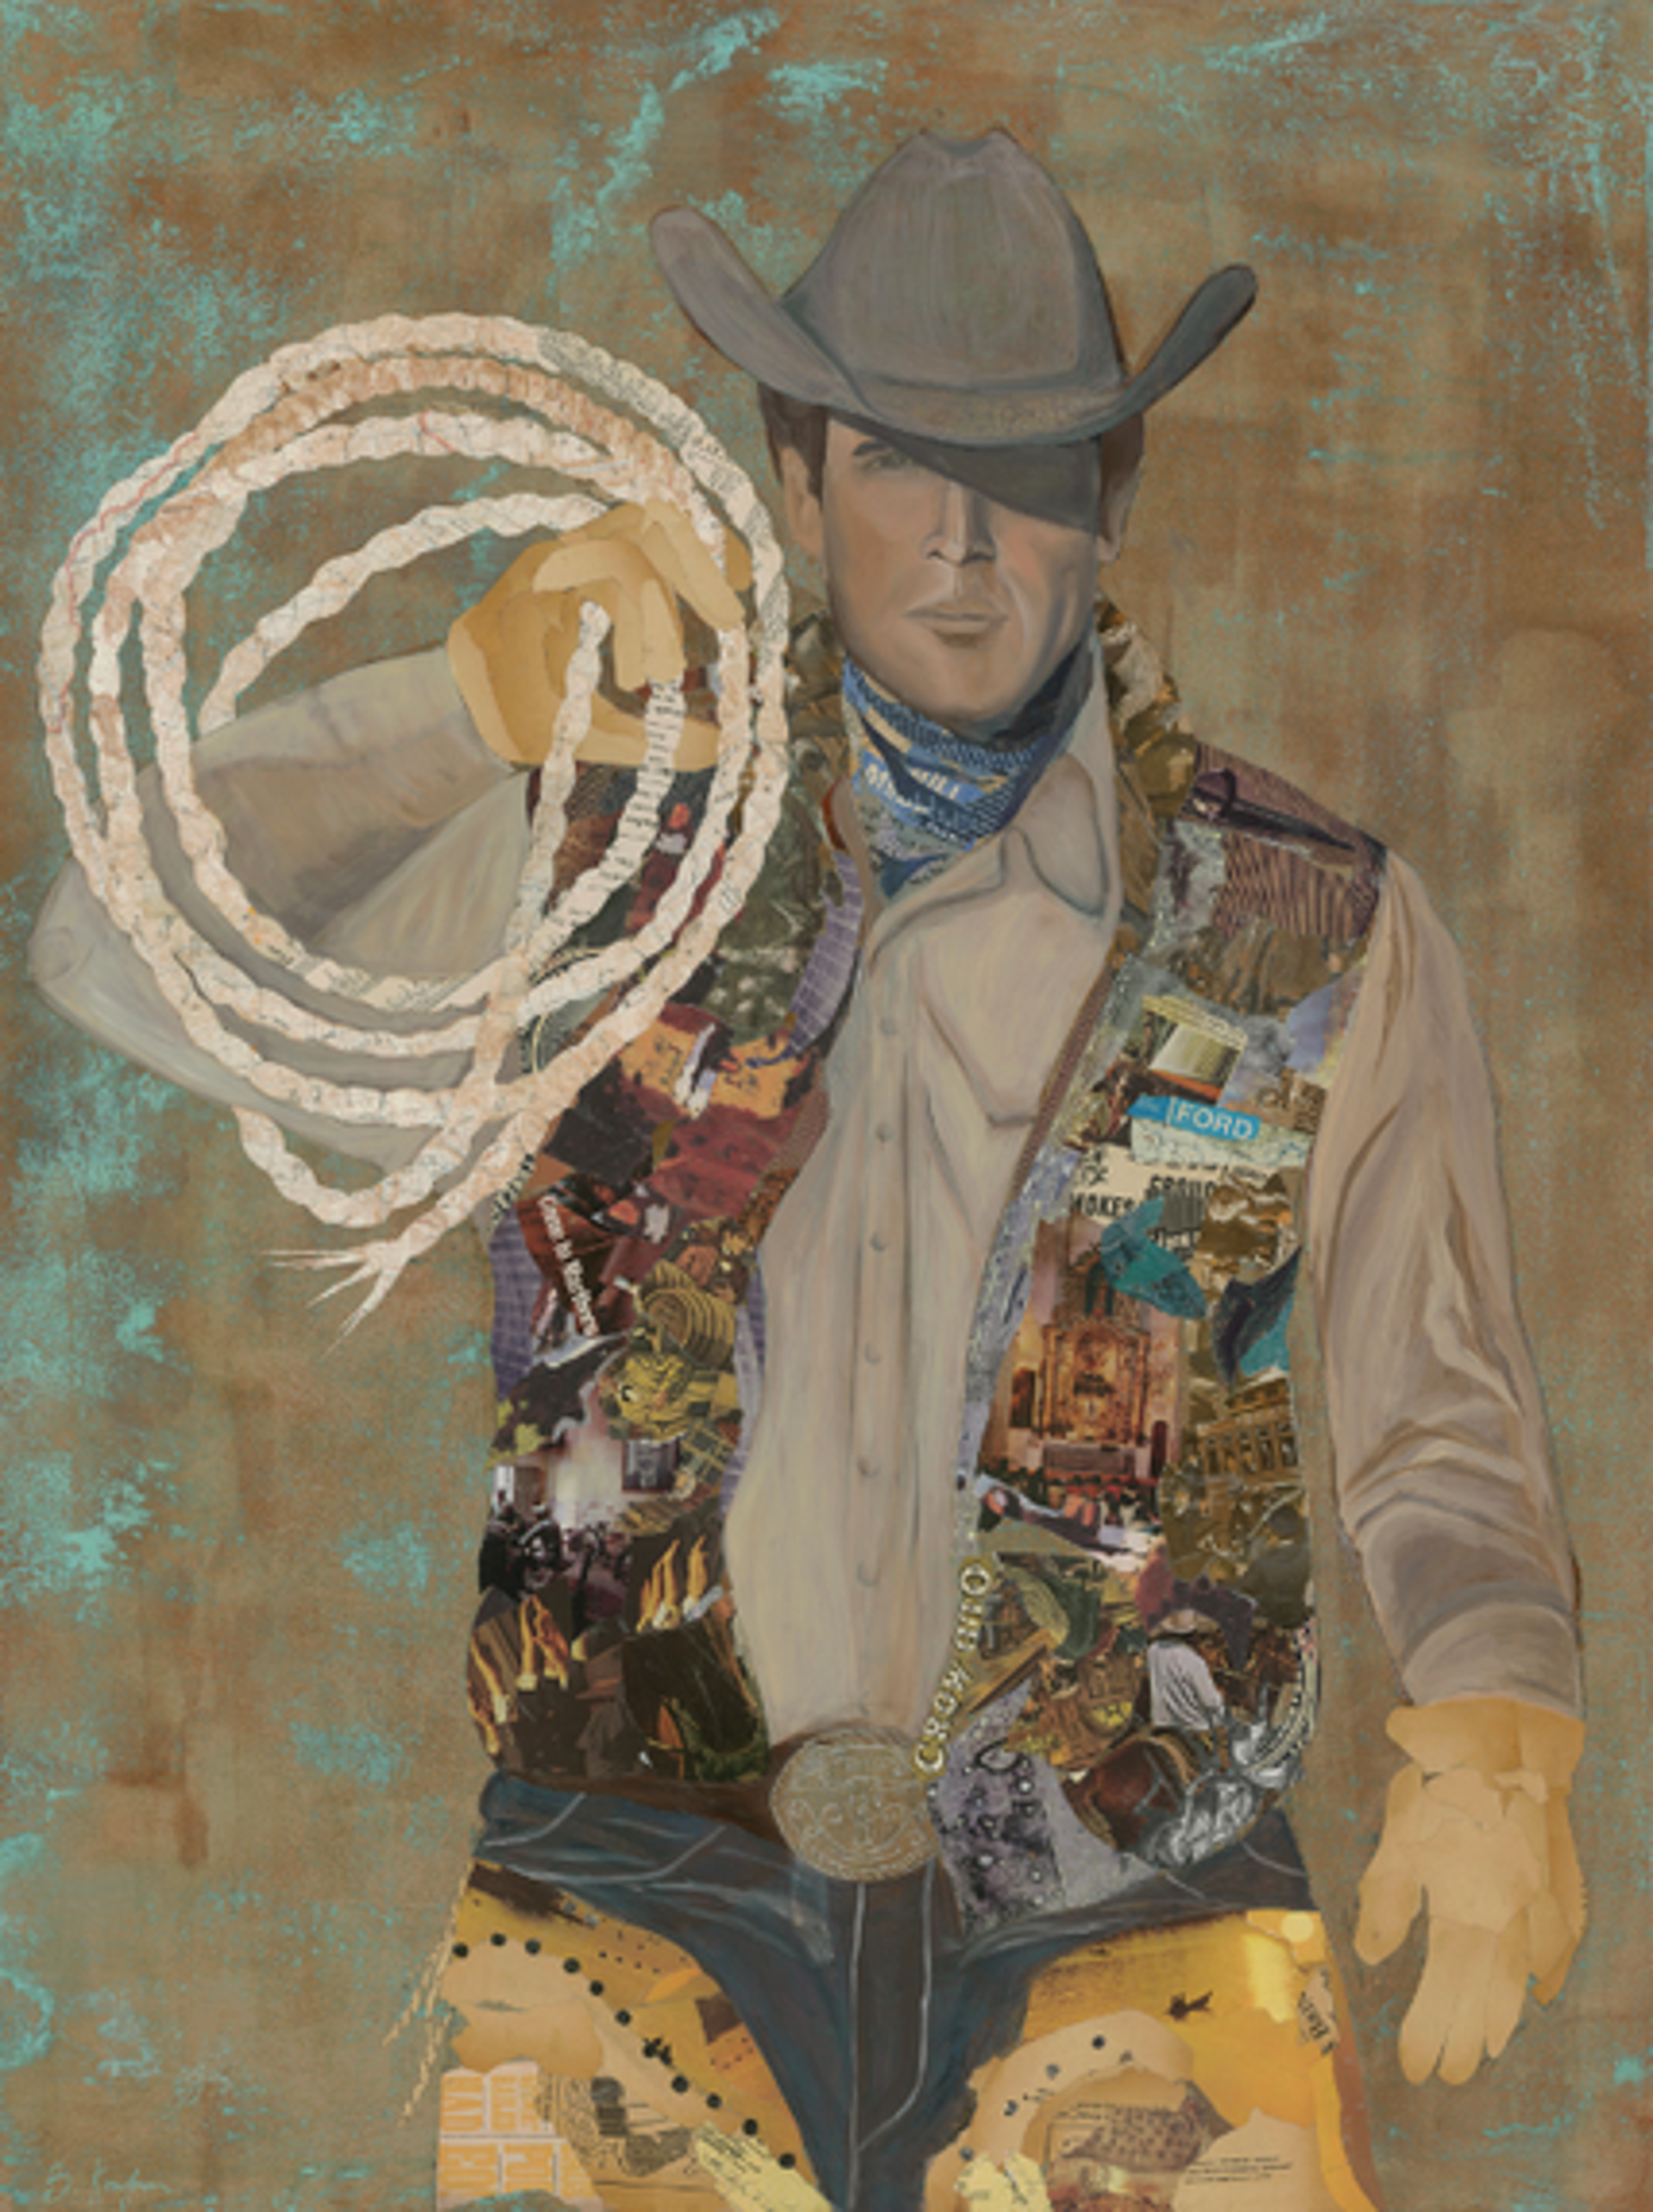 Marlboro Man by Blaire Kaufman